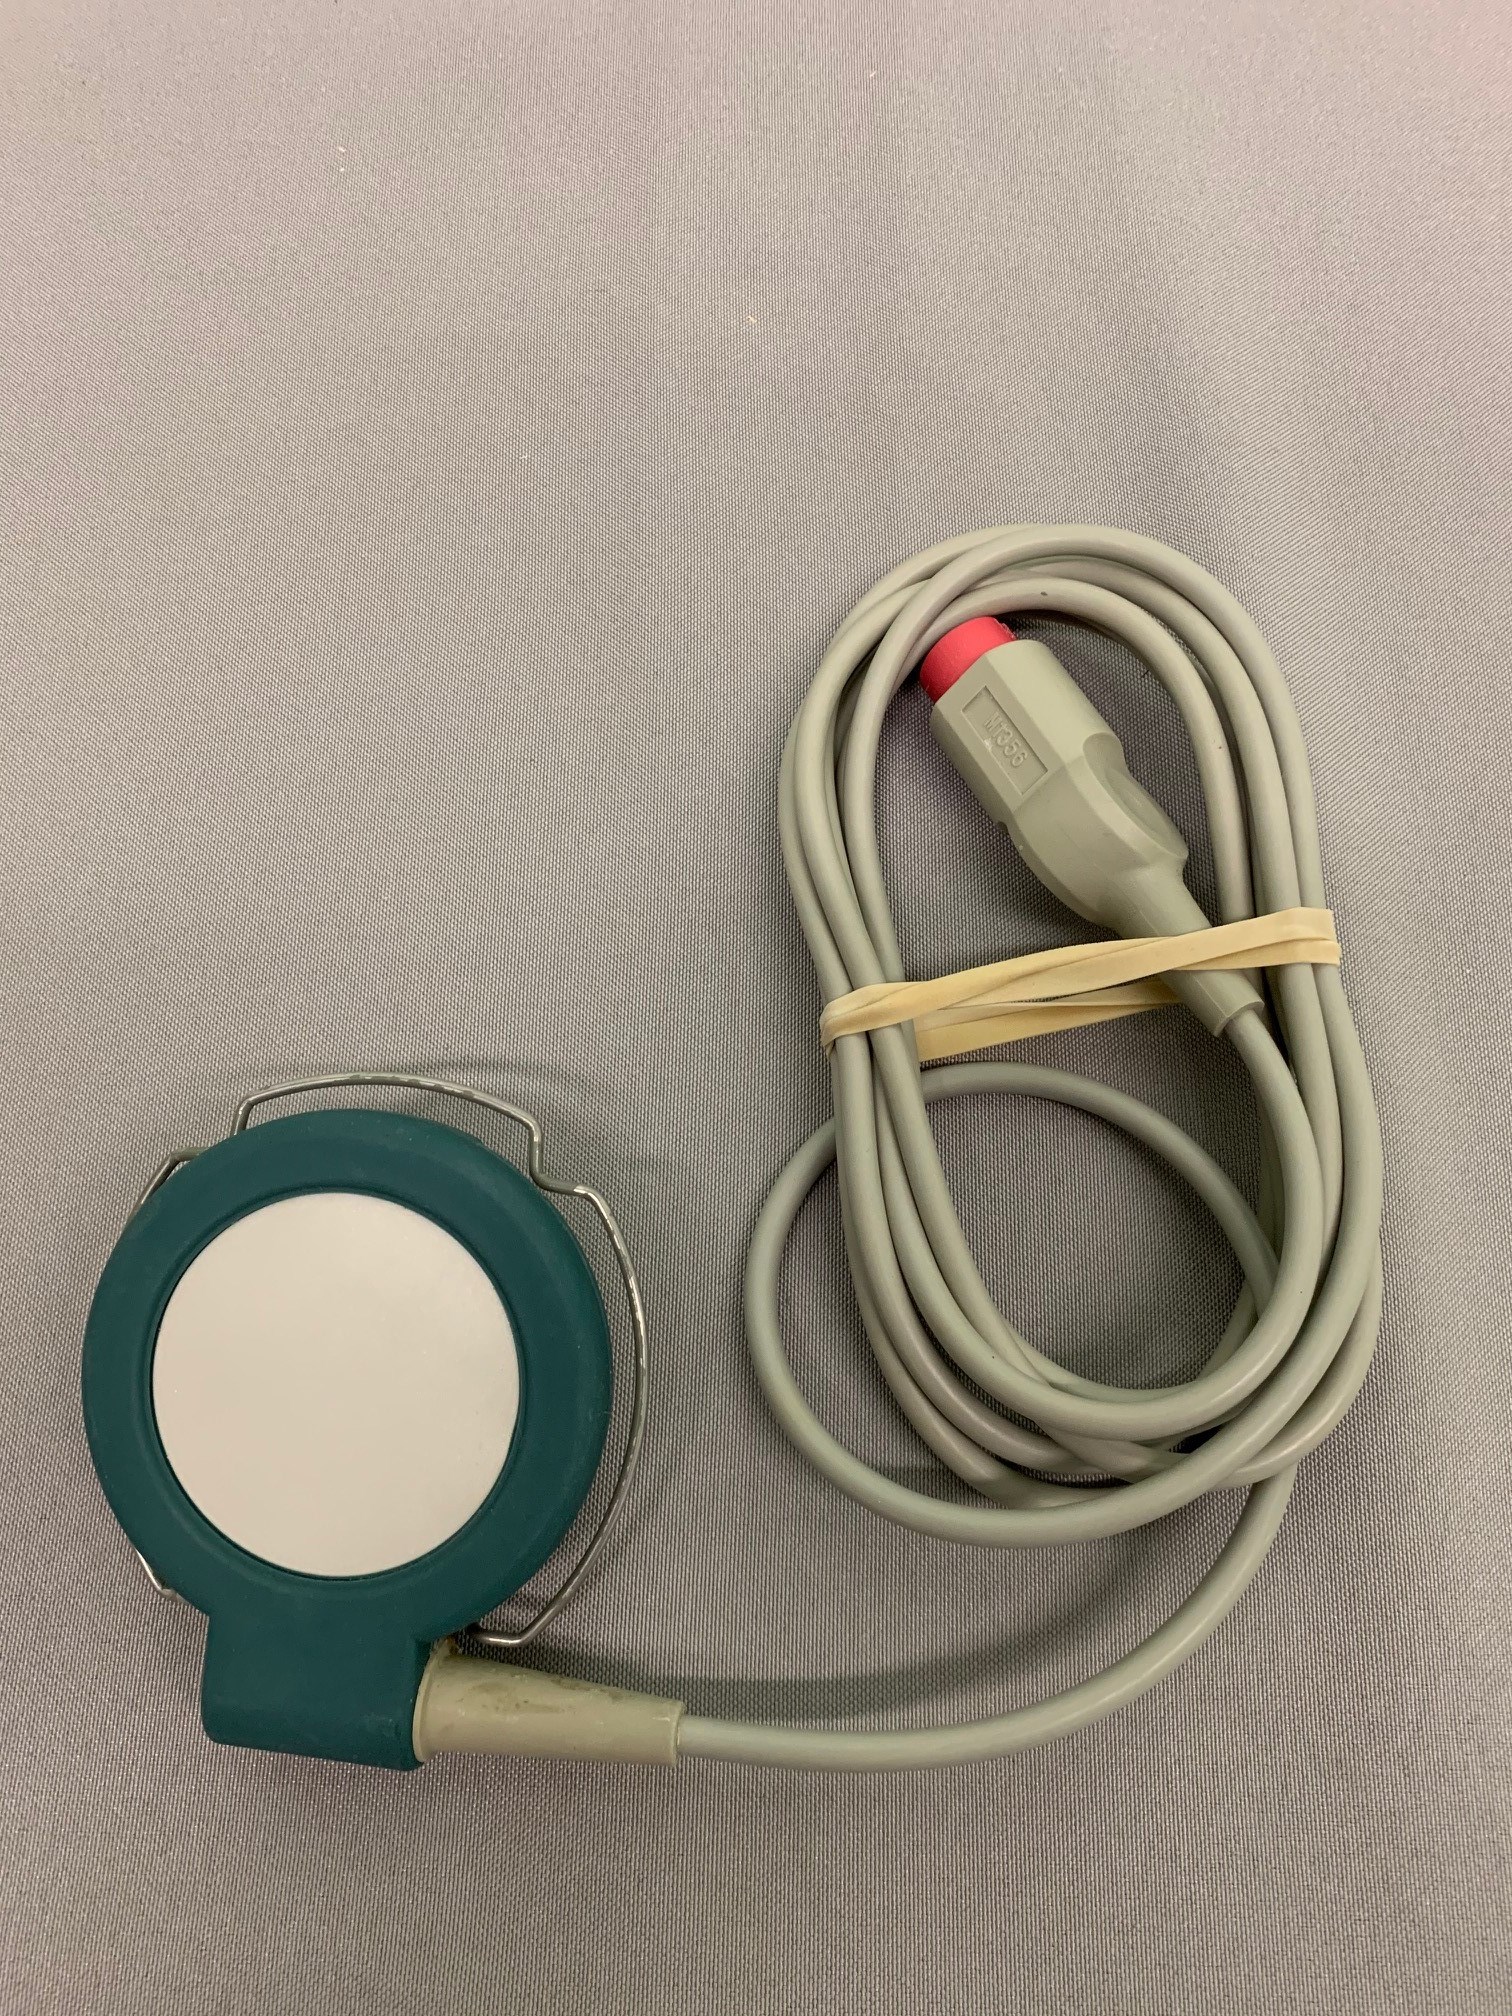 OTHER Neonatal Ultrasound Transducer - M1356 #1